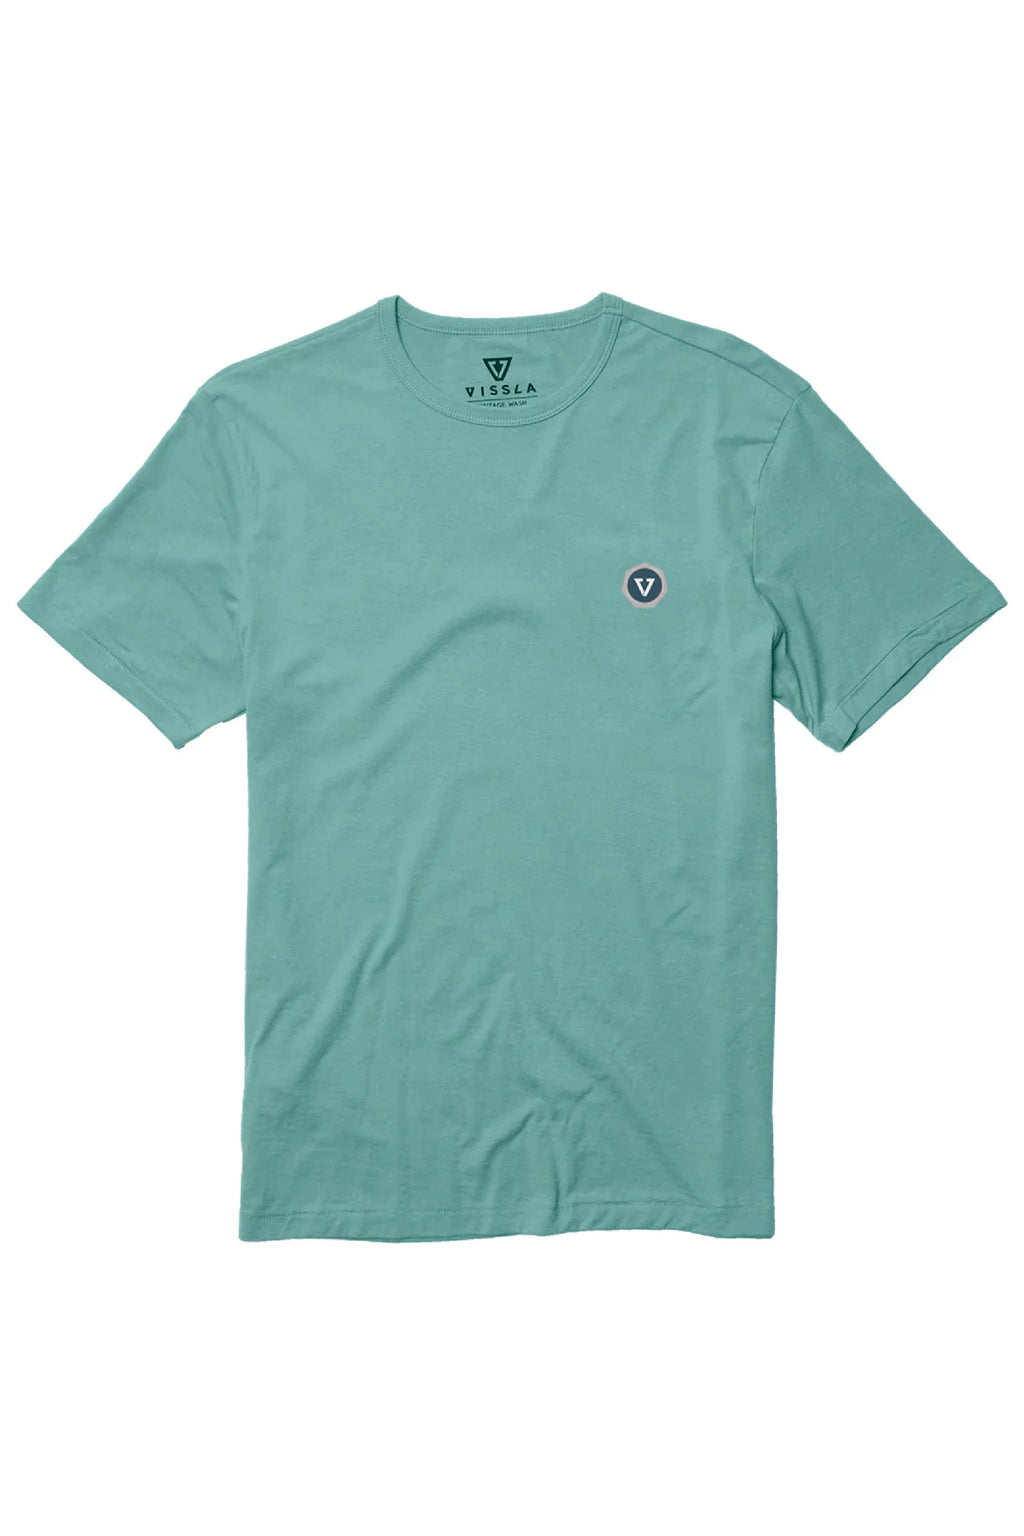 Vissla - Seven Seas T-Shirt